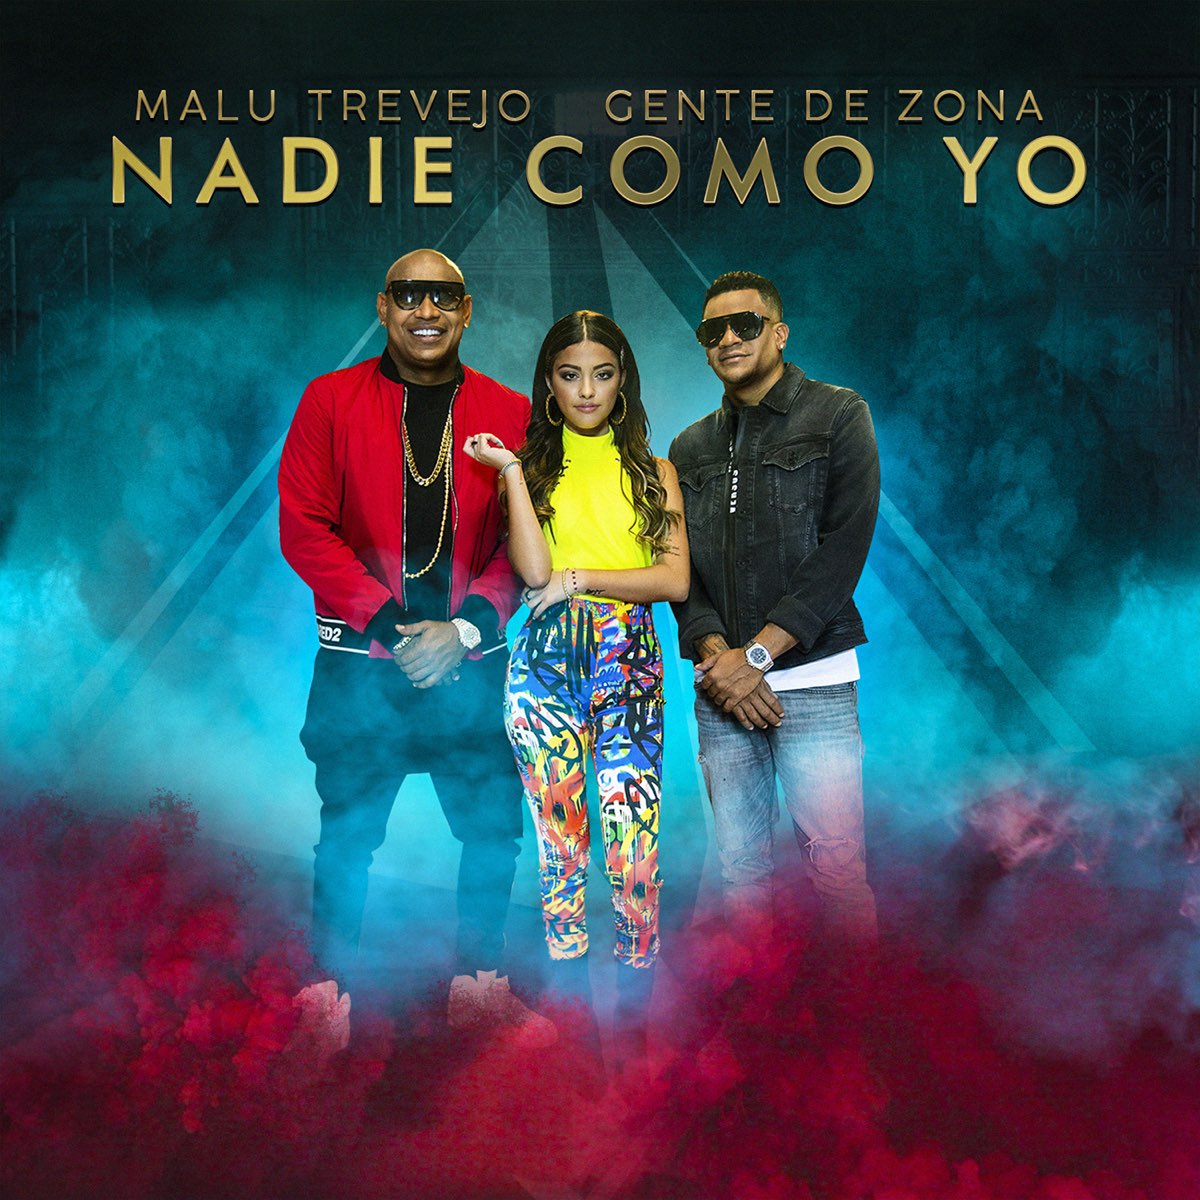 Nadie Como Yo - Single - Album by Malú Trevejo & Gente de Zona - Apple Music